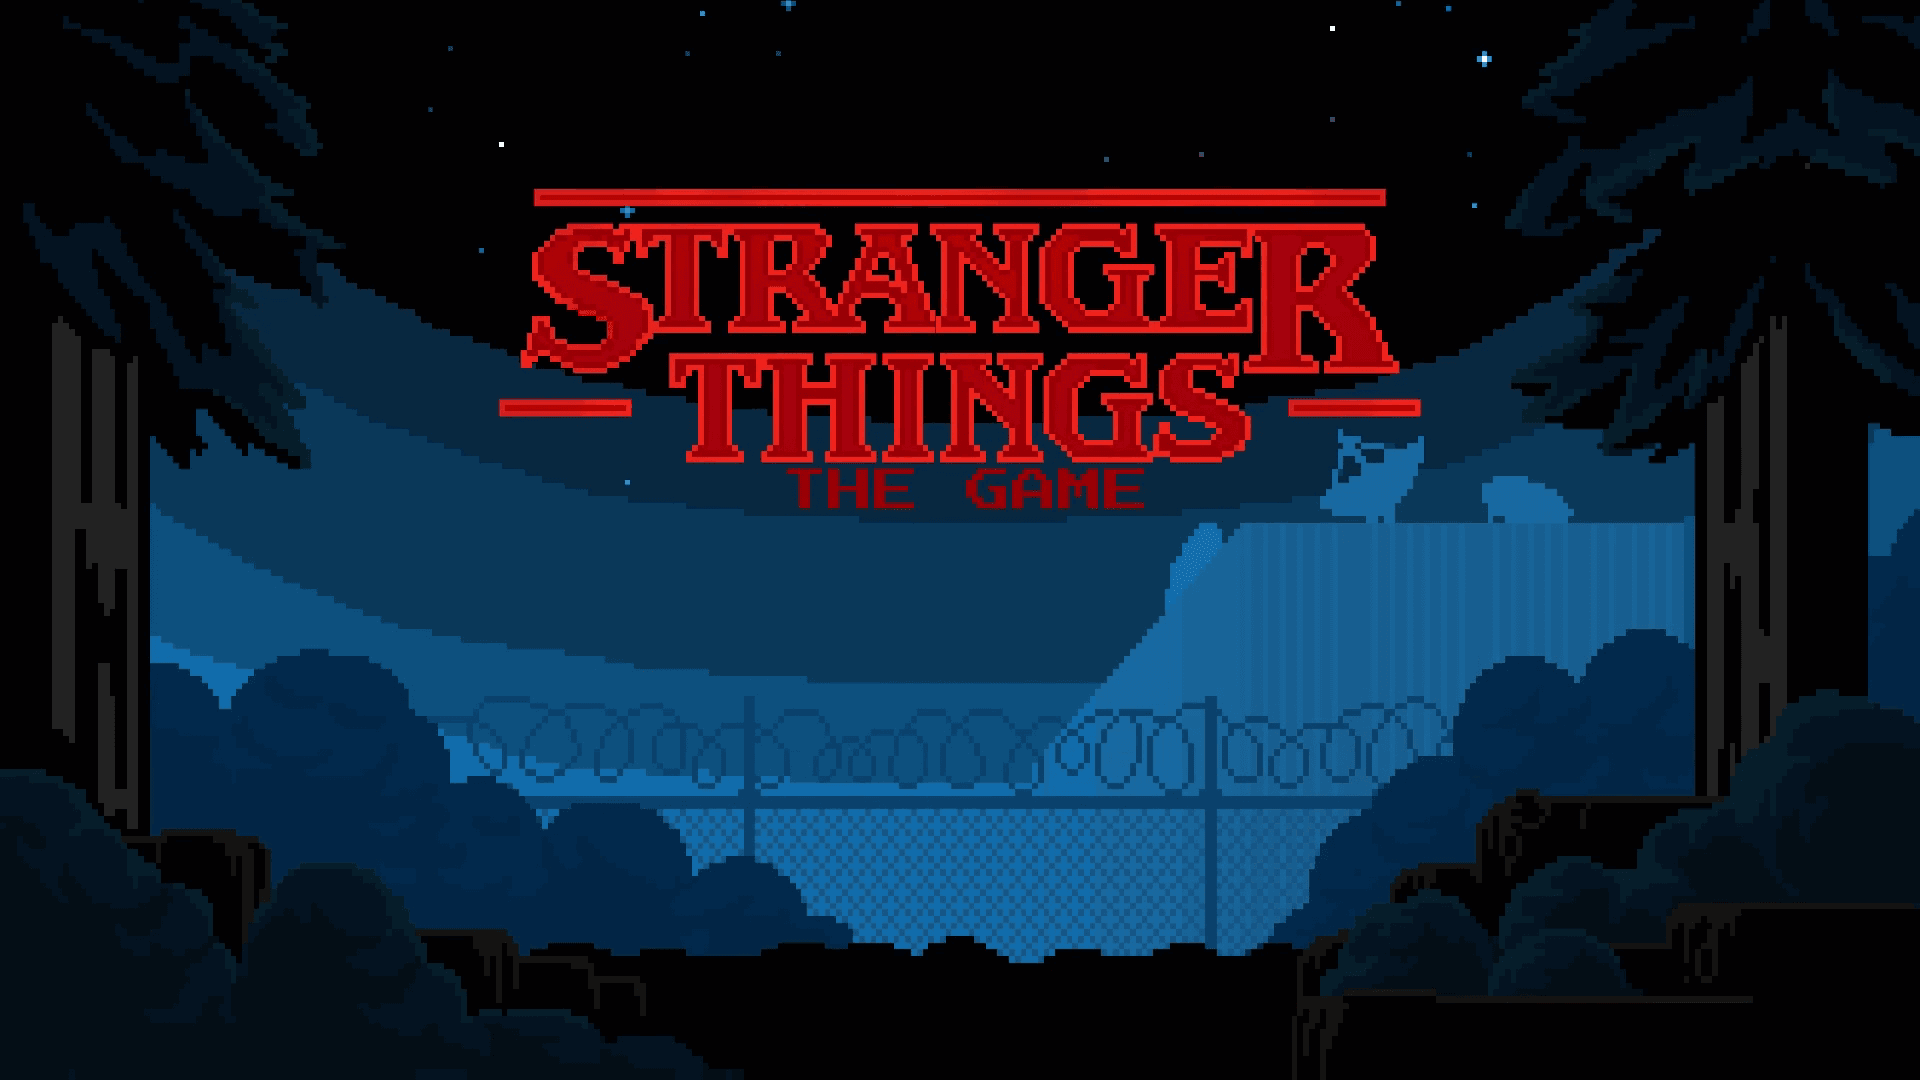 Stranger Things 3 The Game Pc Version Full Game Free